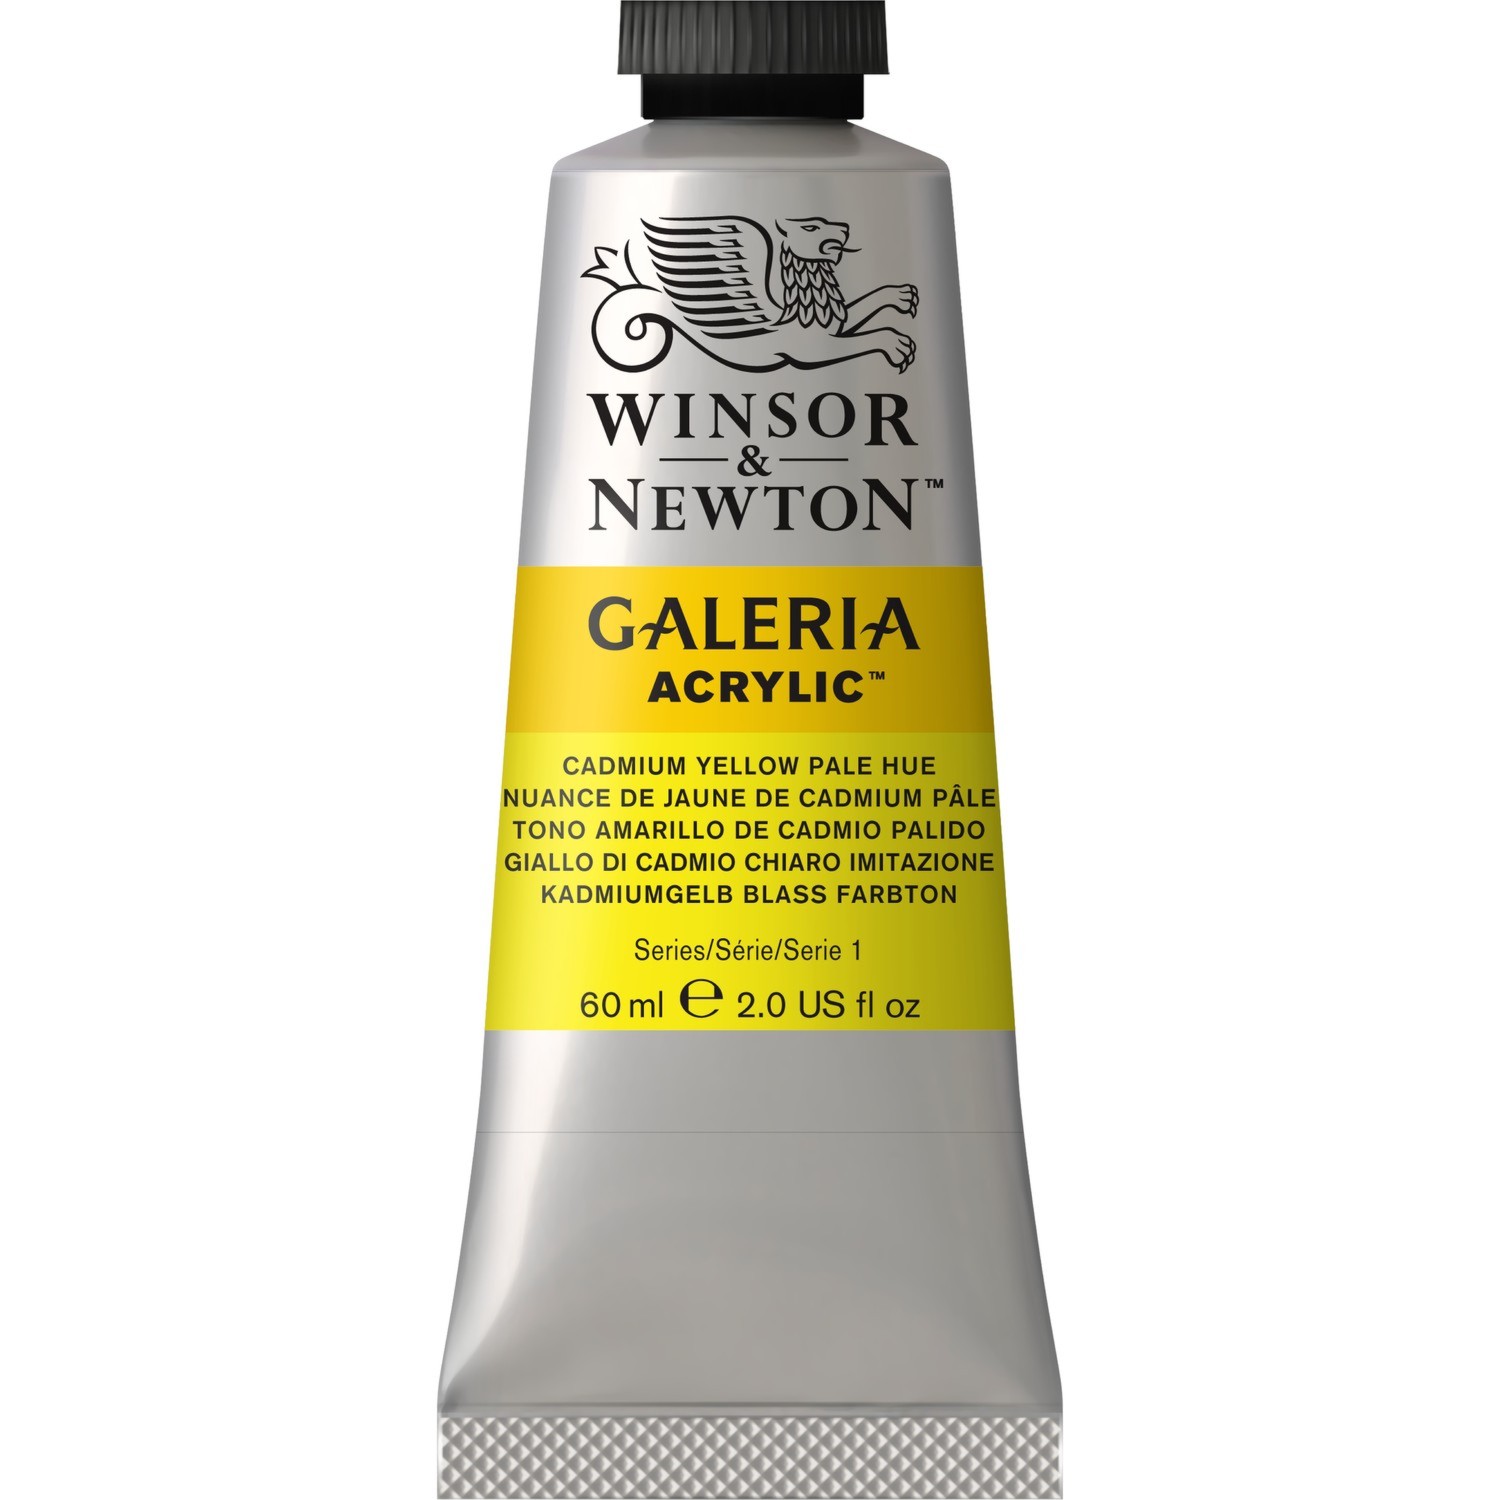 Winsor and Newton 60ml Galeria Acrylic Paint - Cadmium Pale Yellow Image 1